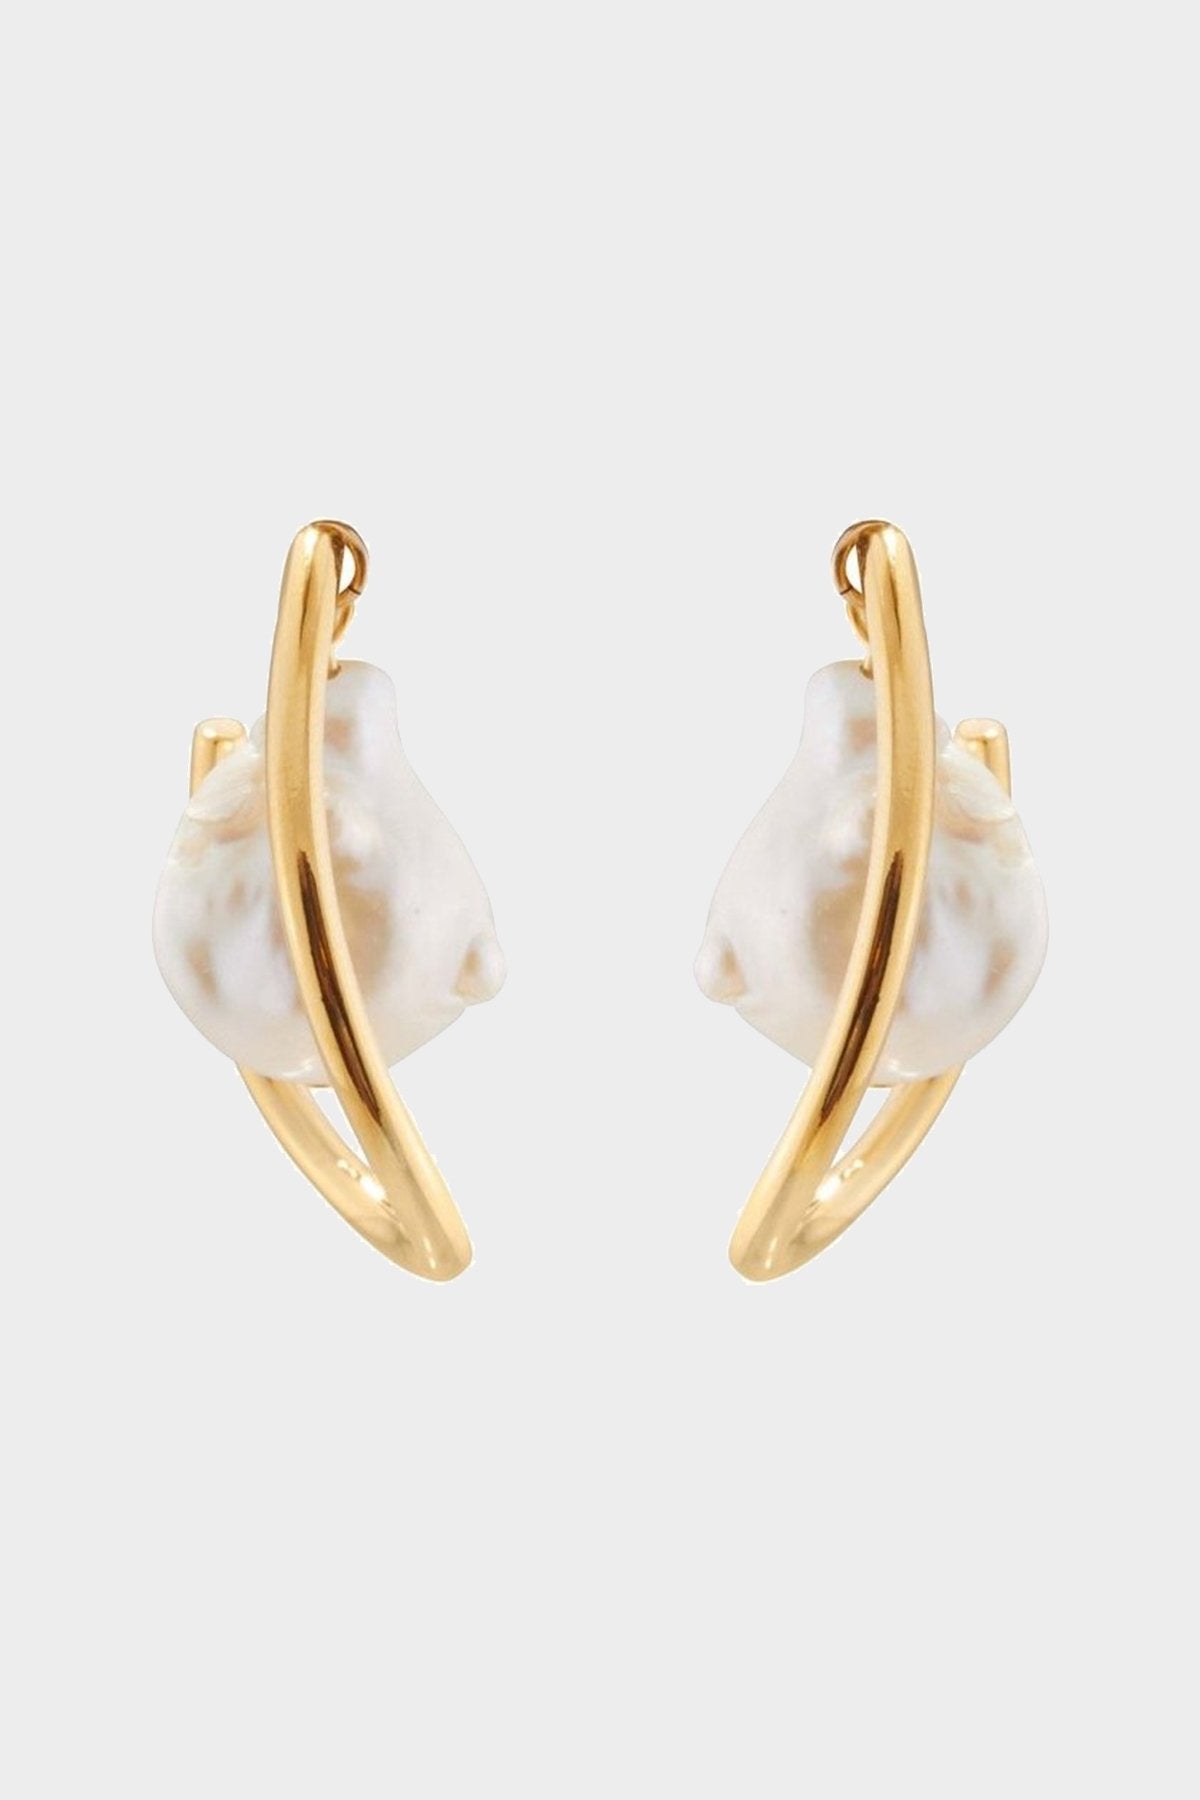 Waxing Hoop Earrings with Freshwater Pearl Drop in Gold - shop-olivia.com